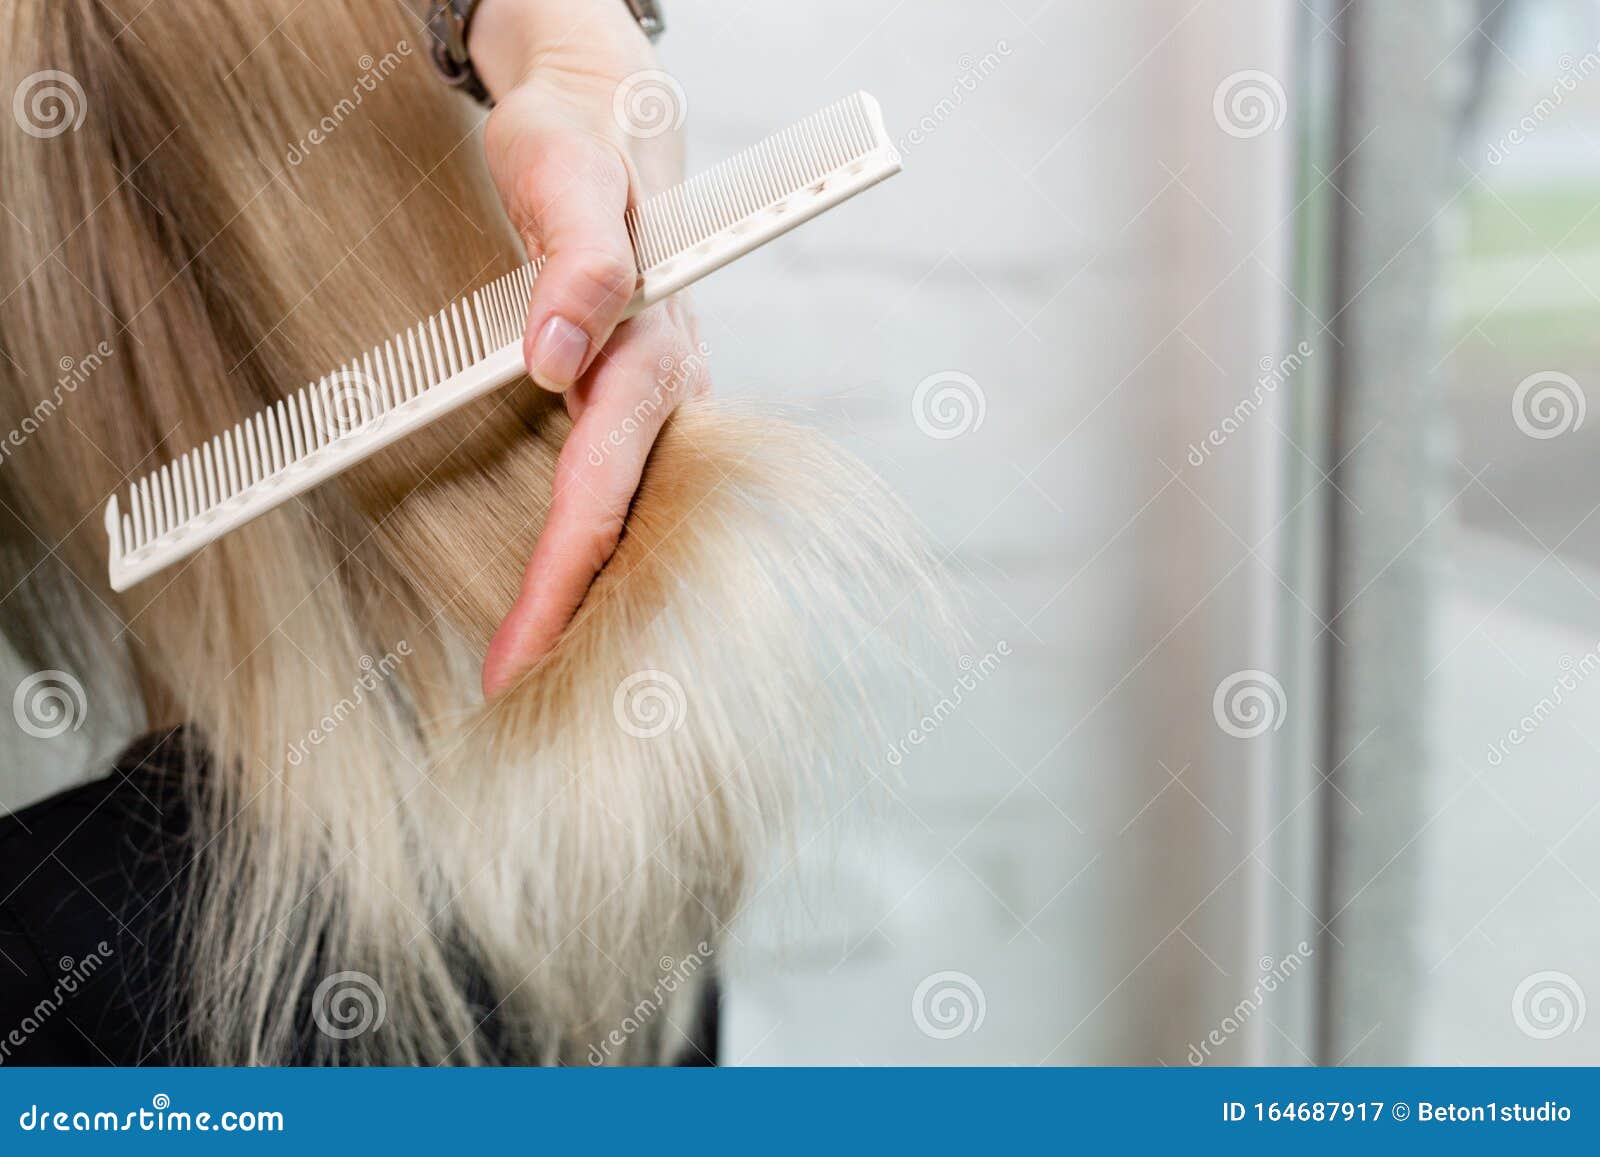 40 HQ Pictures Blonde On Blonde Hair Salon : Perfect Blonde Hair Colour Top Hair Salon Little Sutton